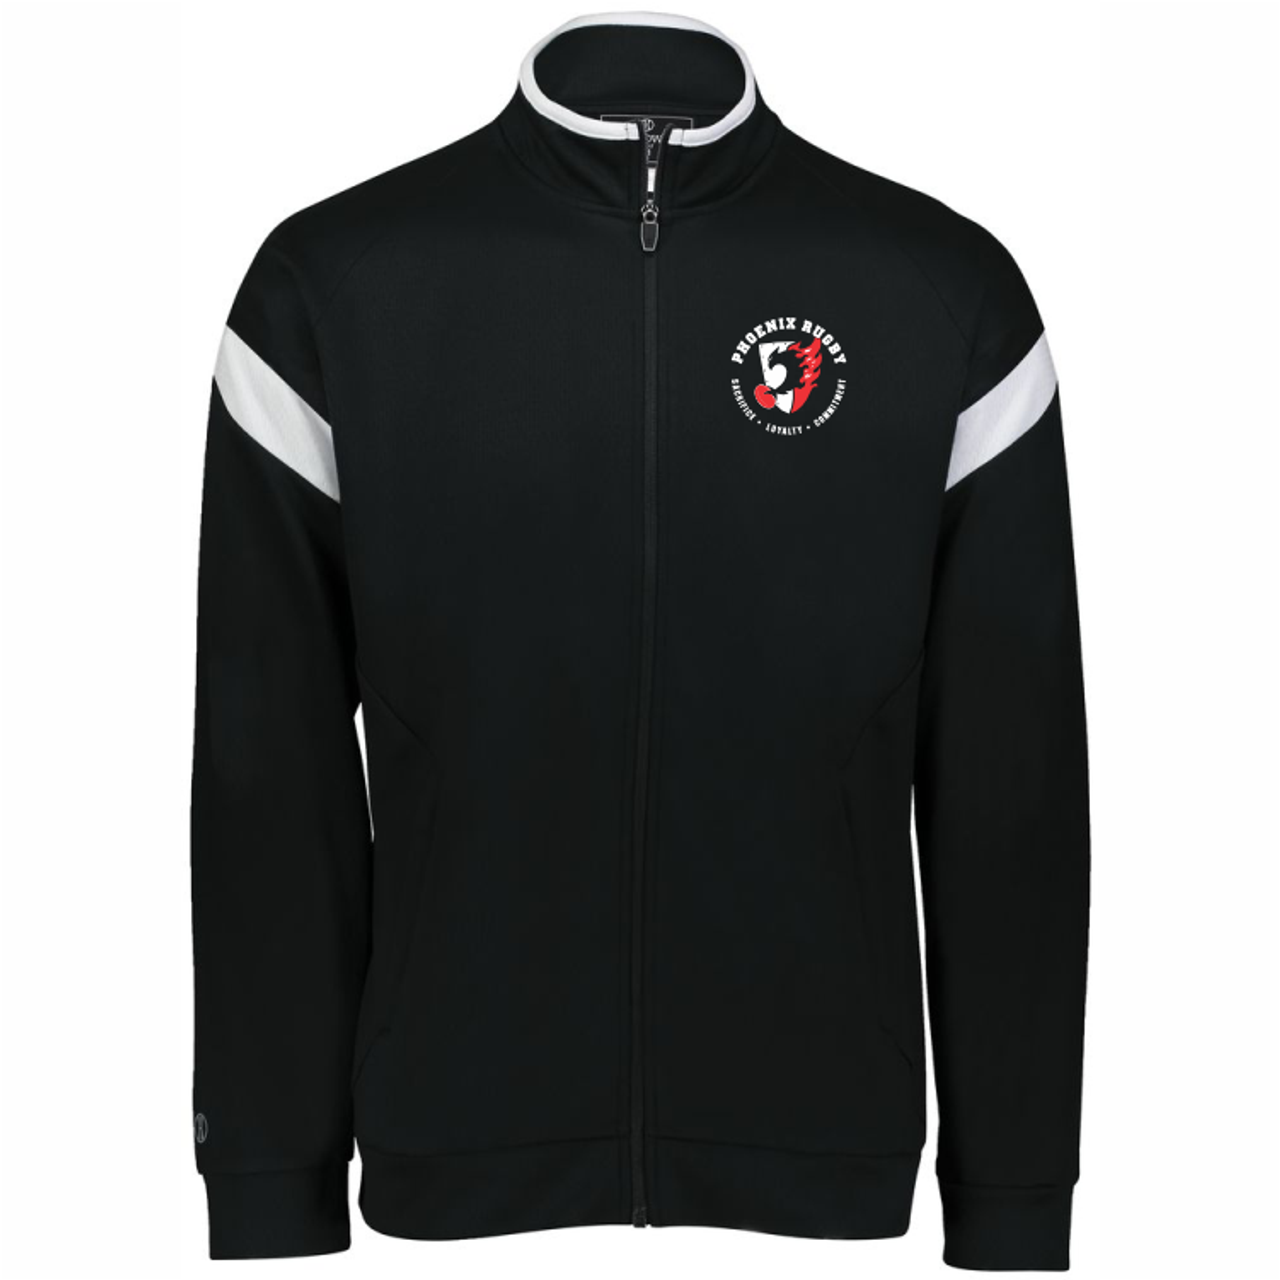 Phoenix Rugby Club Warm Up Jacket, Black/White